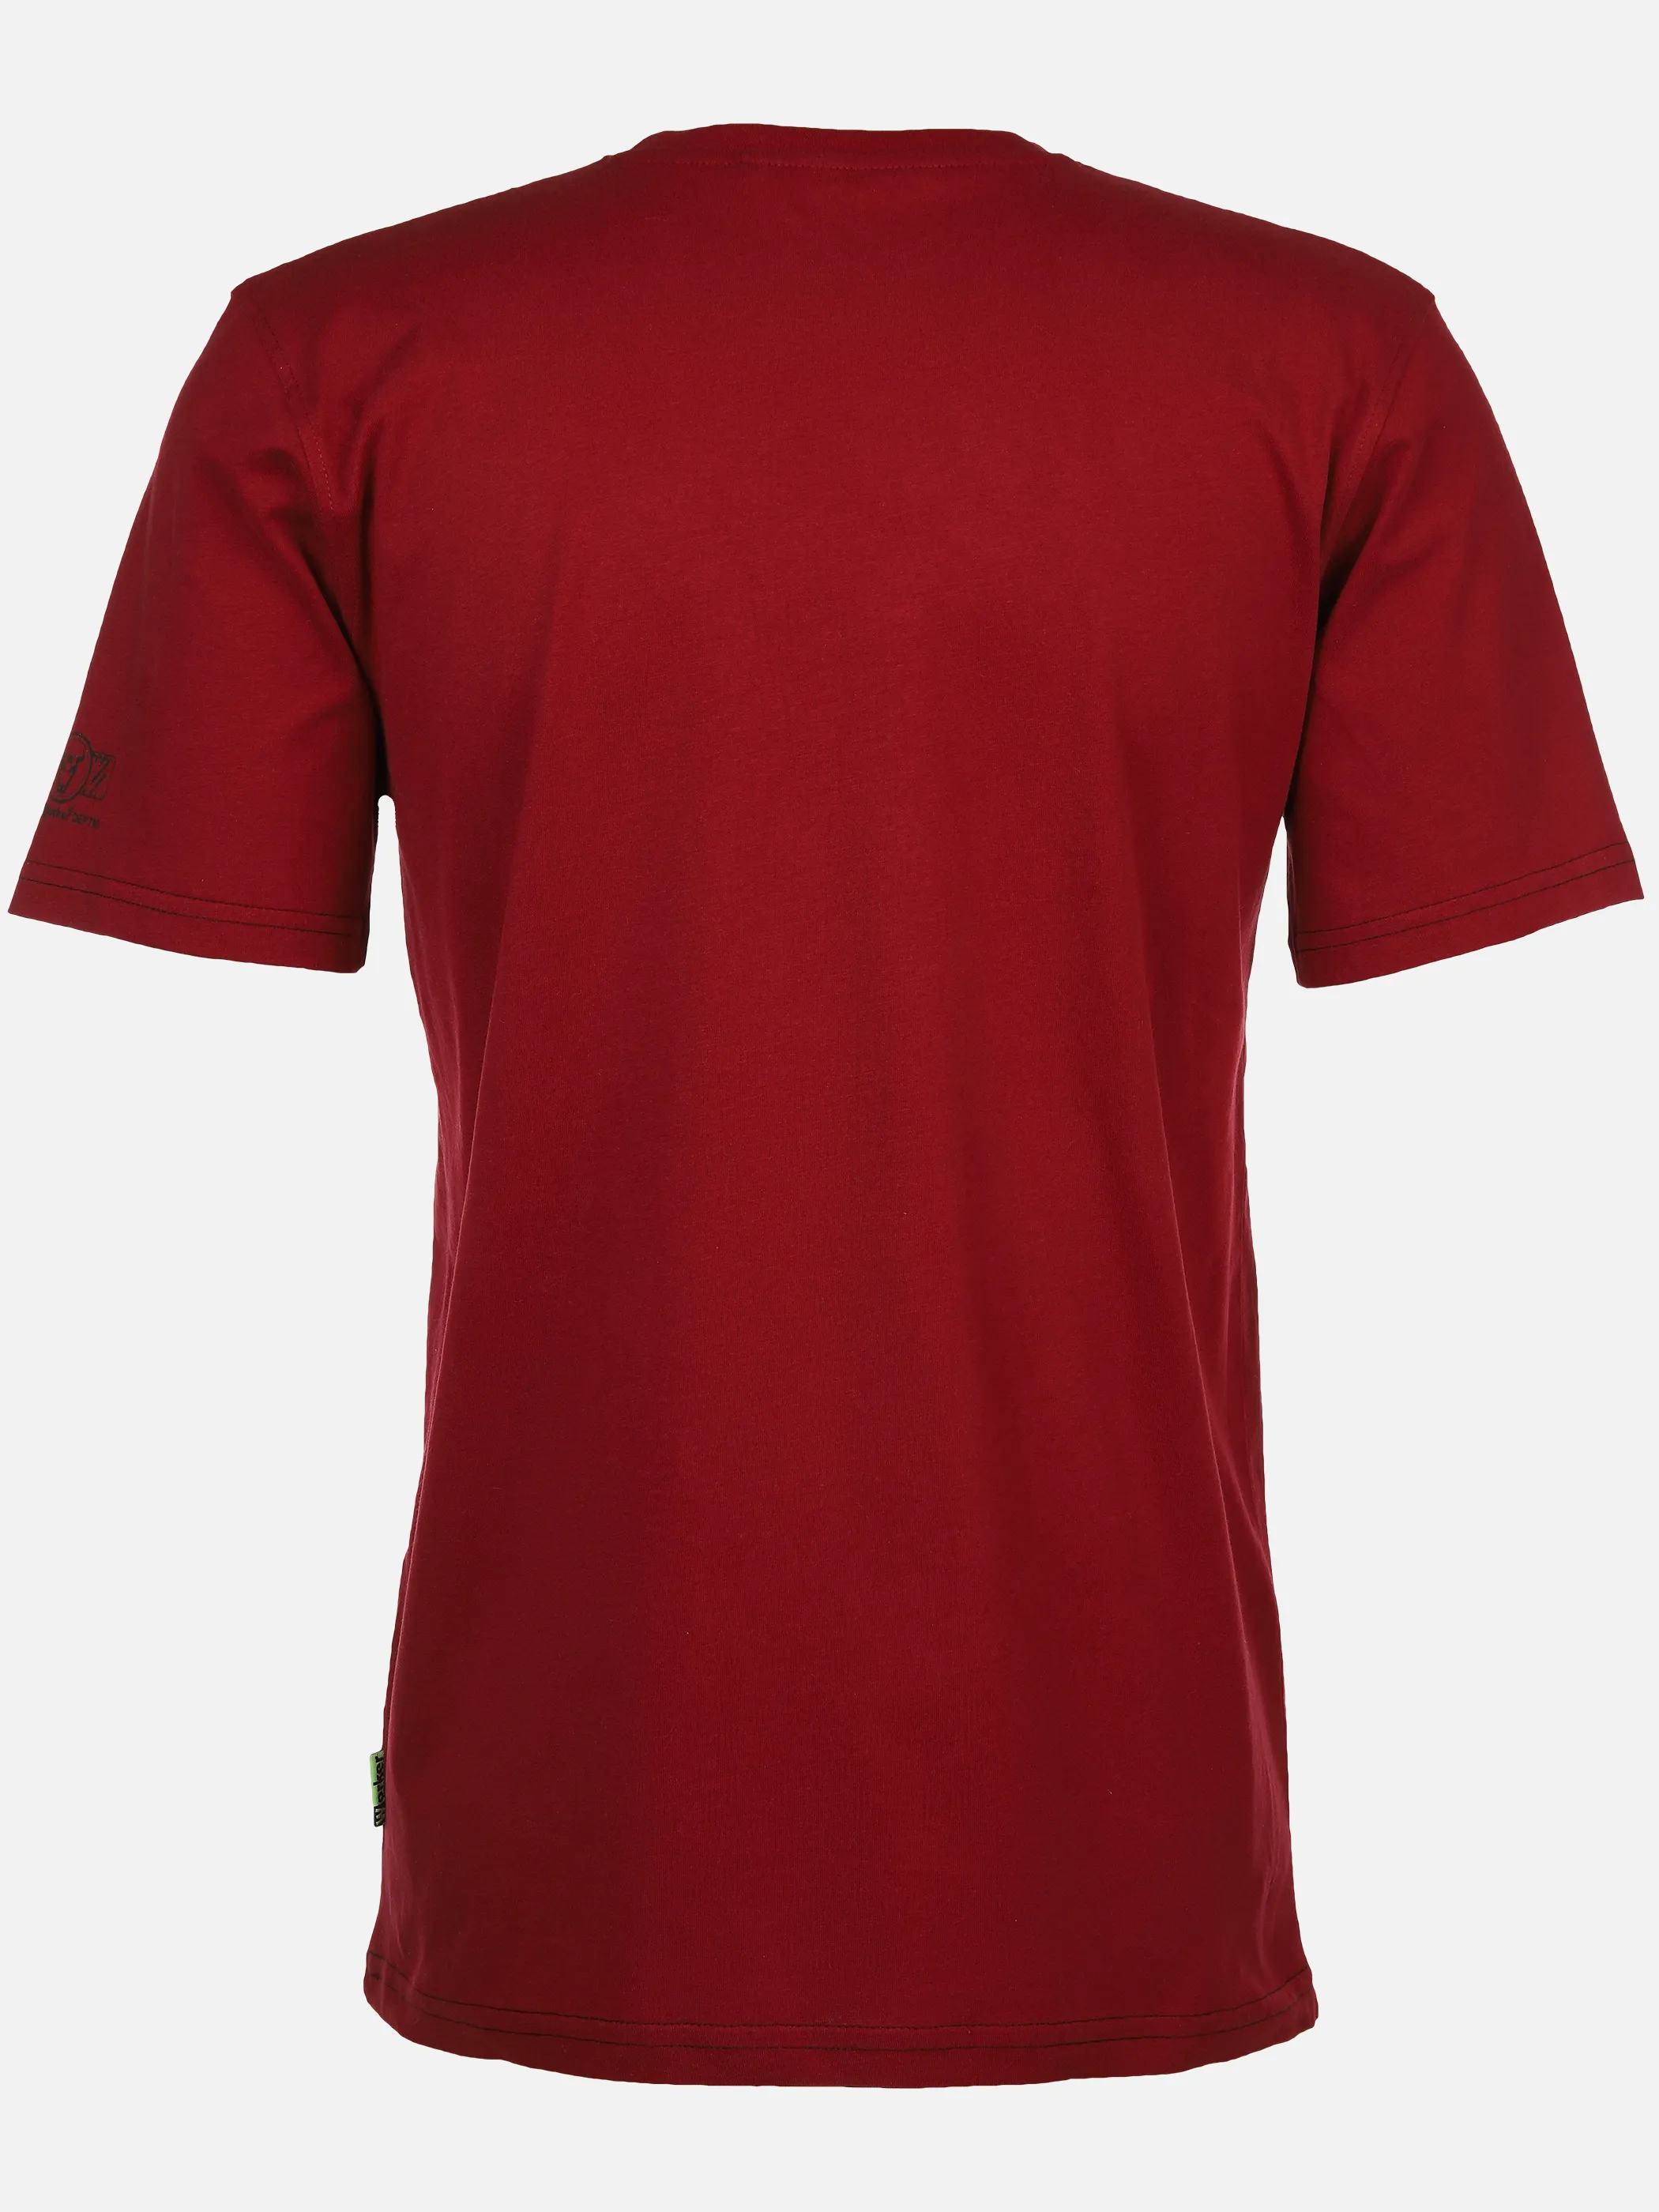 Worker He. T-Shirt 1/2 Arm Sprüche Rot 889118 RED 2